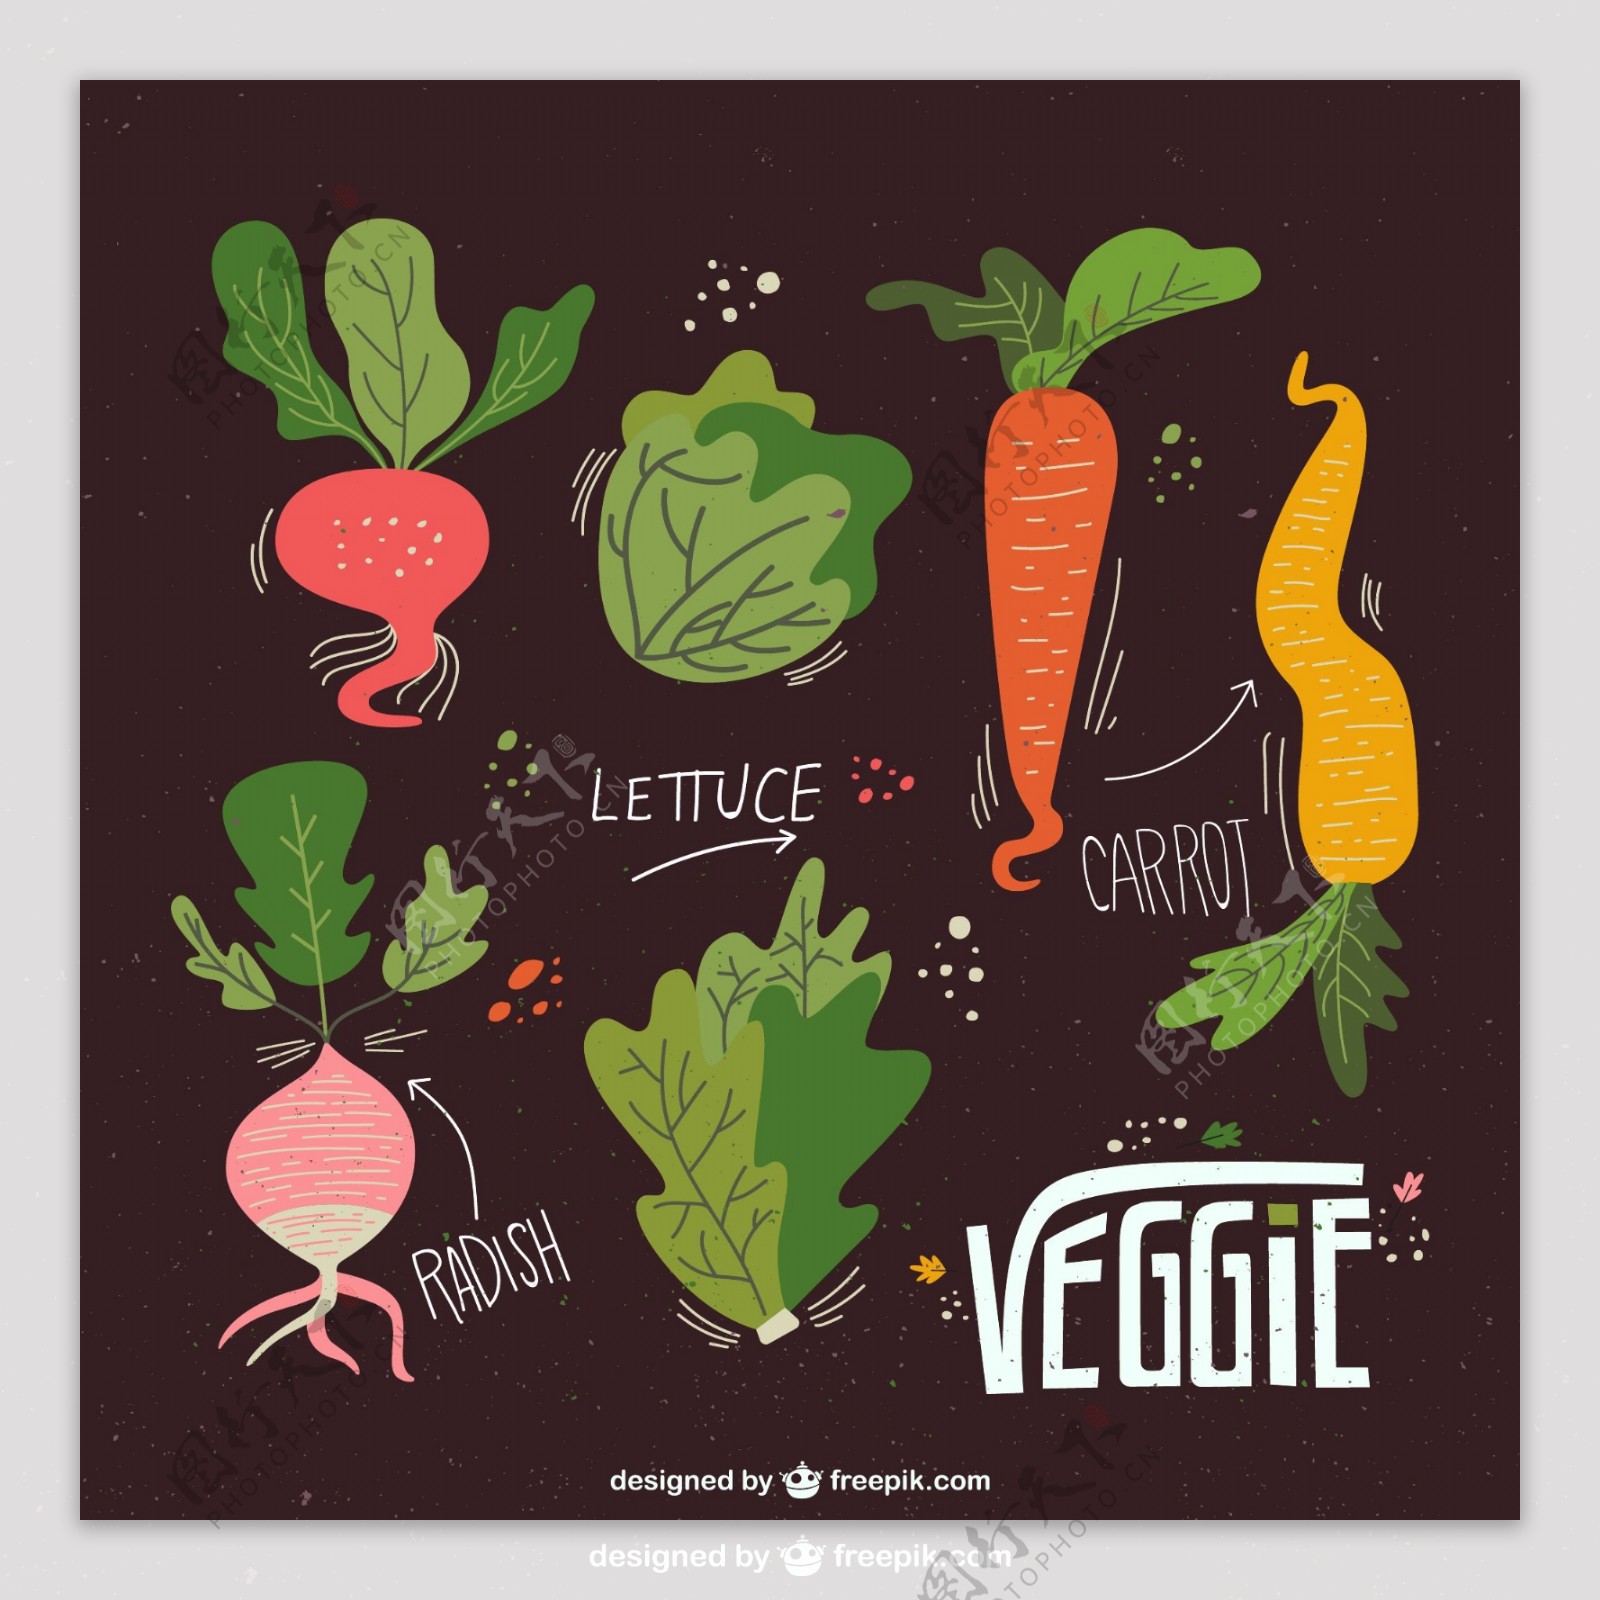 7蔬菜设计